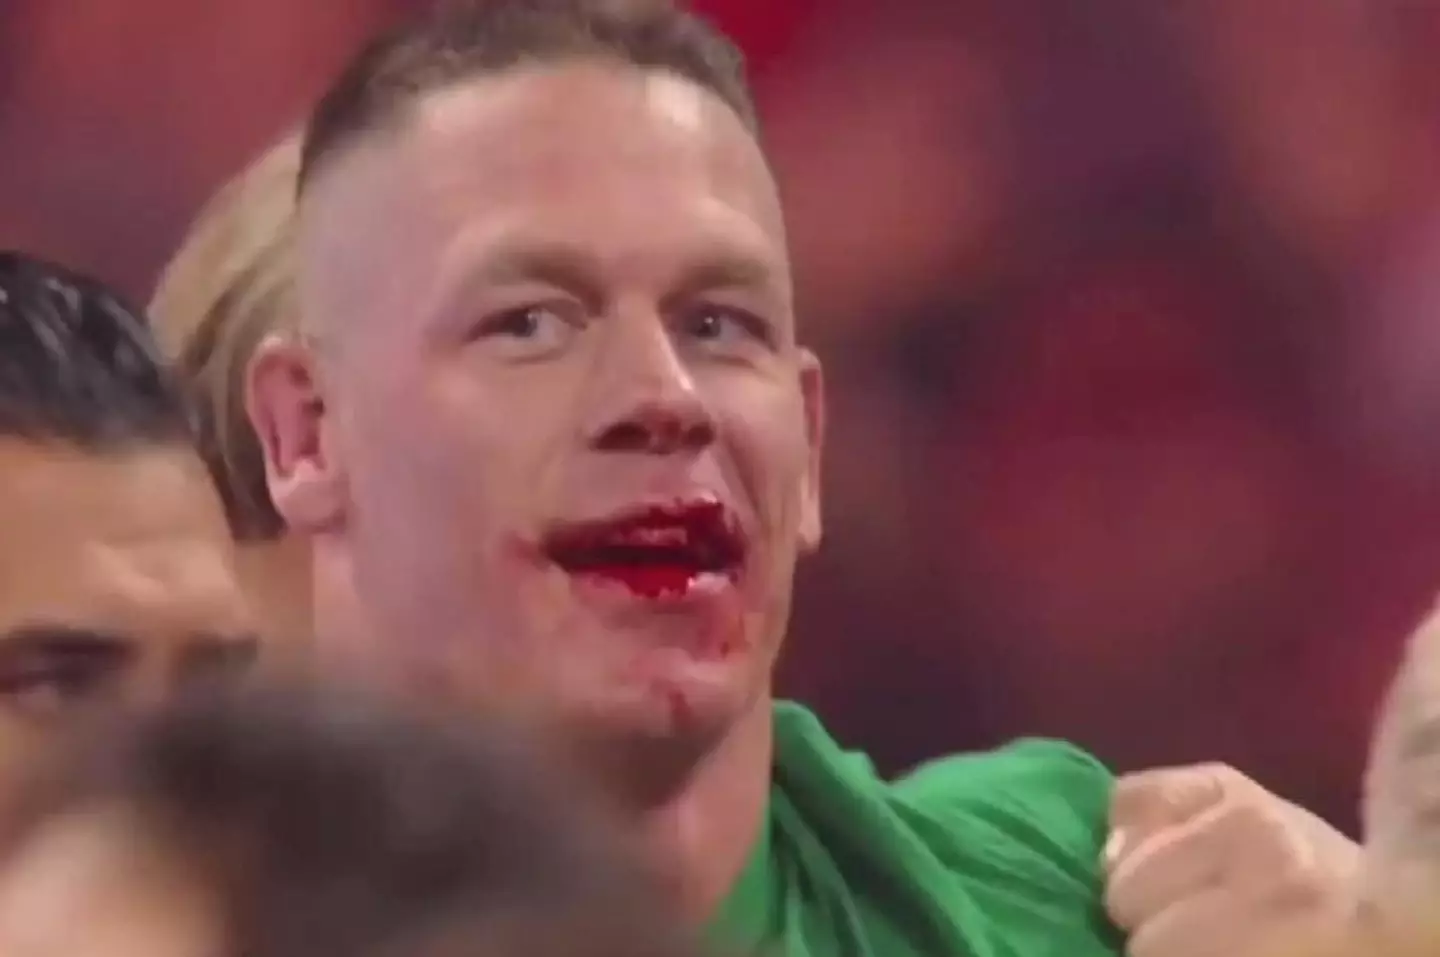 John Cena certainly seemed to feel it.